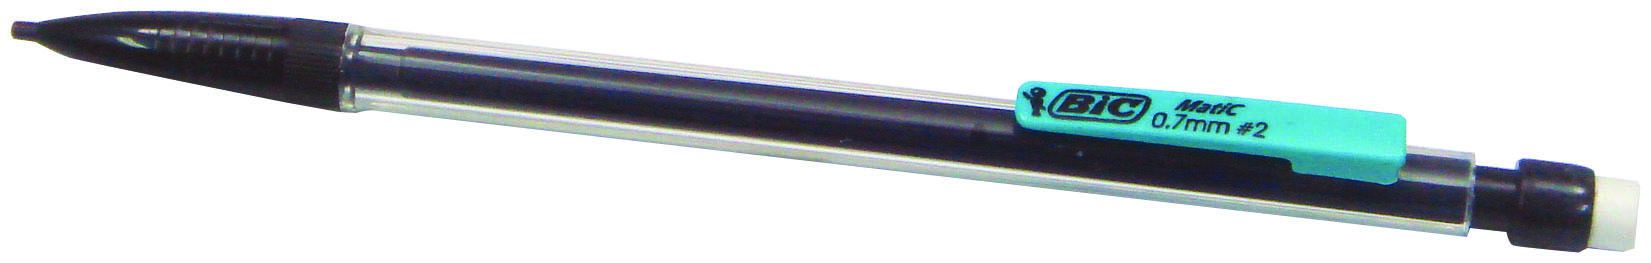 Bic mechanical pencil,  0.7mm